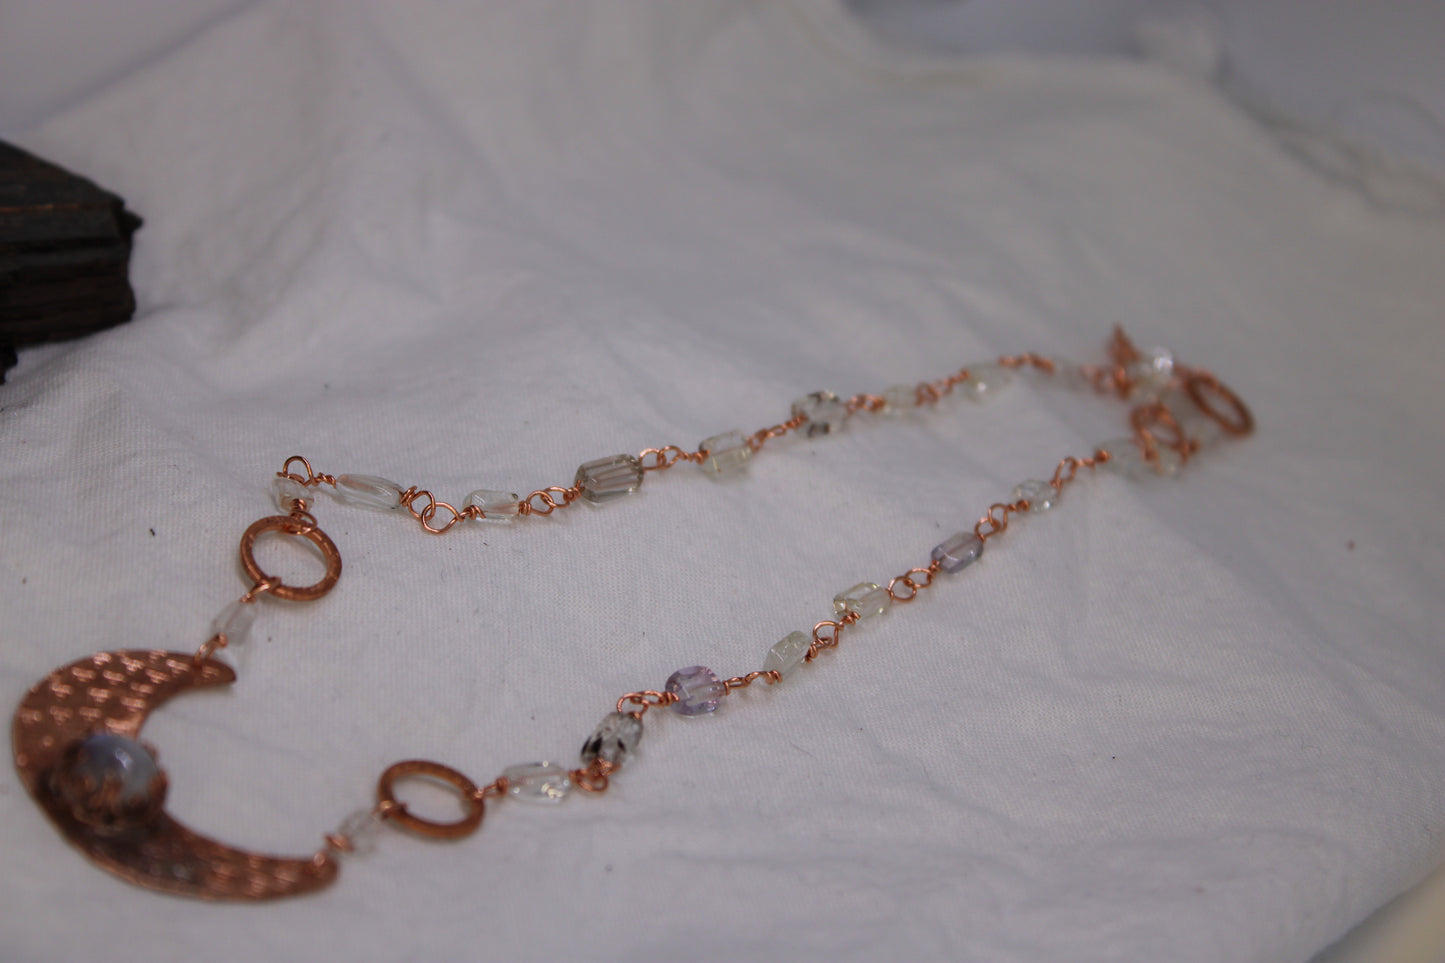 Crescent Moonstone Necklace with Aquamarine bead chain